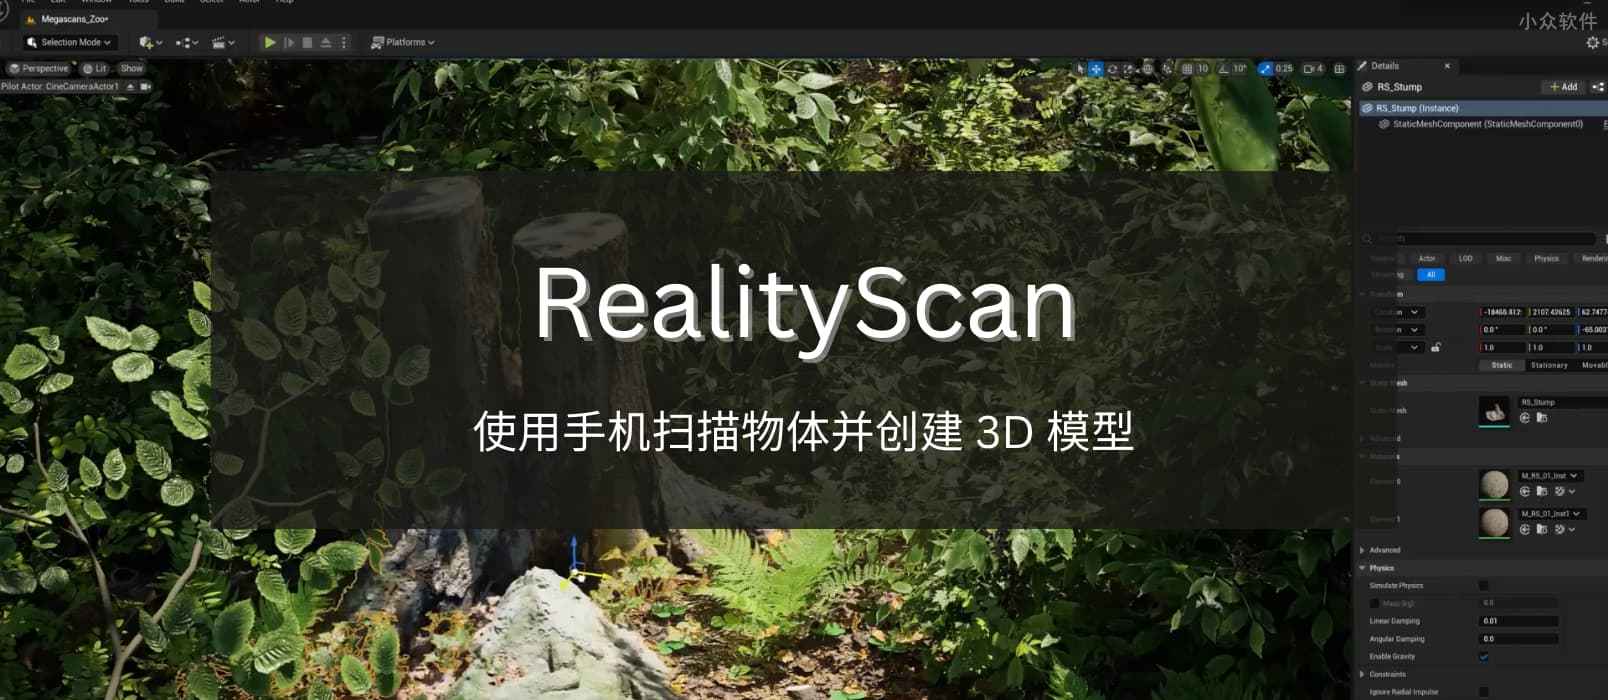 RealityScan – 来自 Epic，使用手机扫描物体并创建 3D 模型[iPhone/iPad]